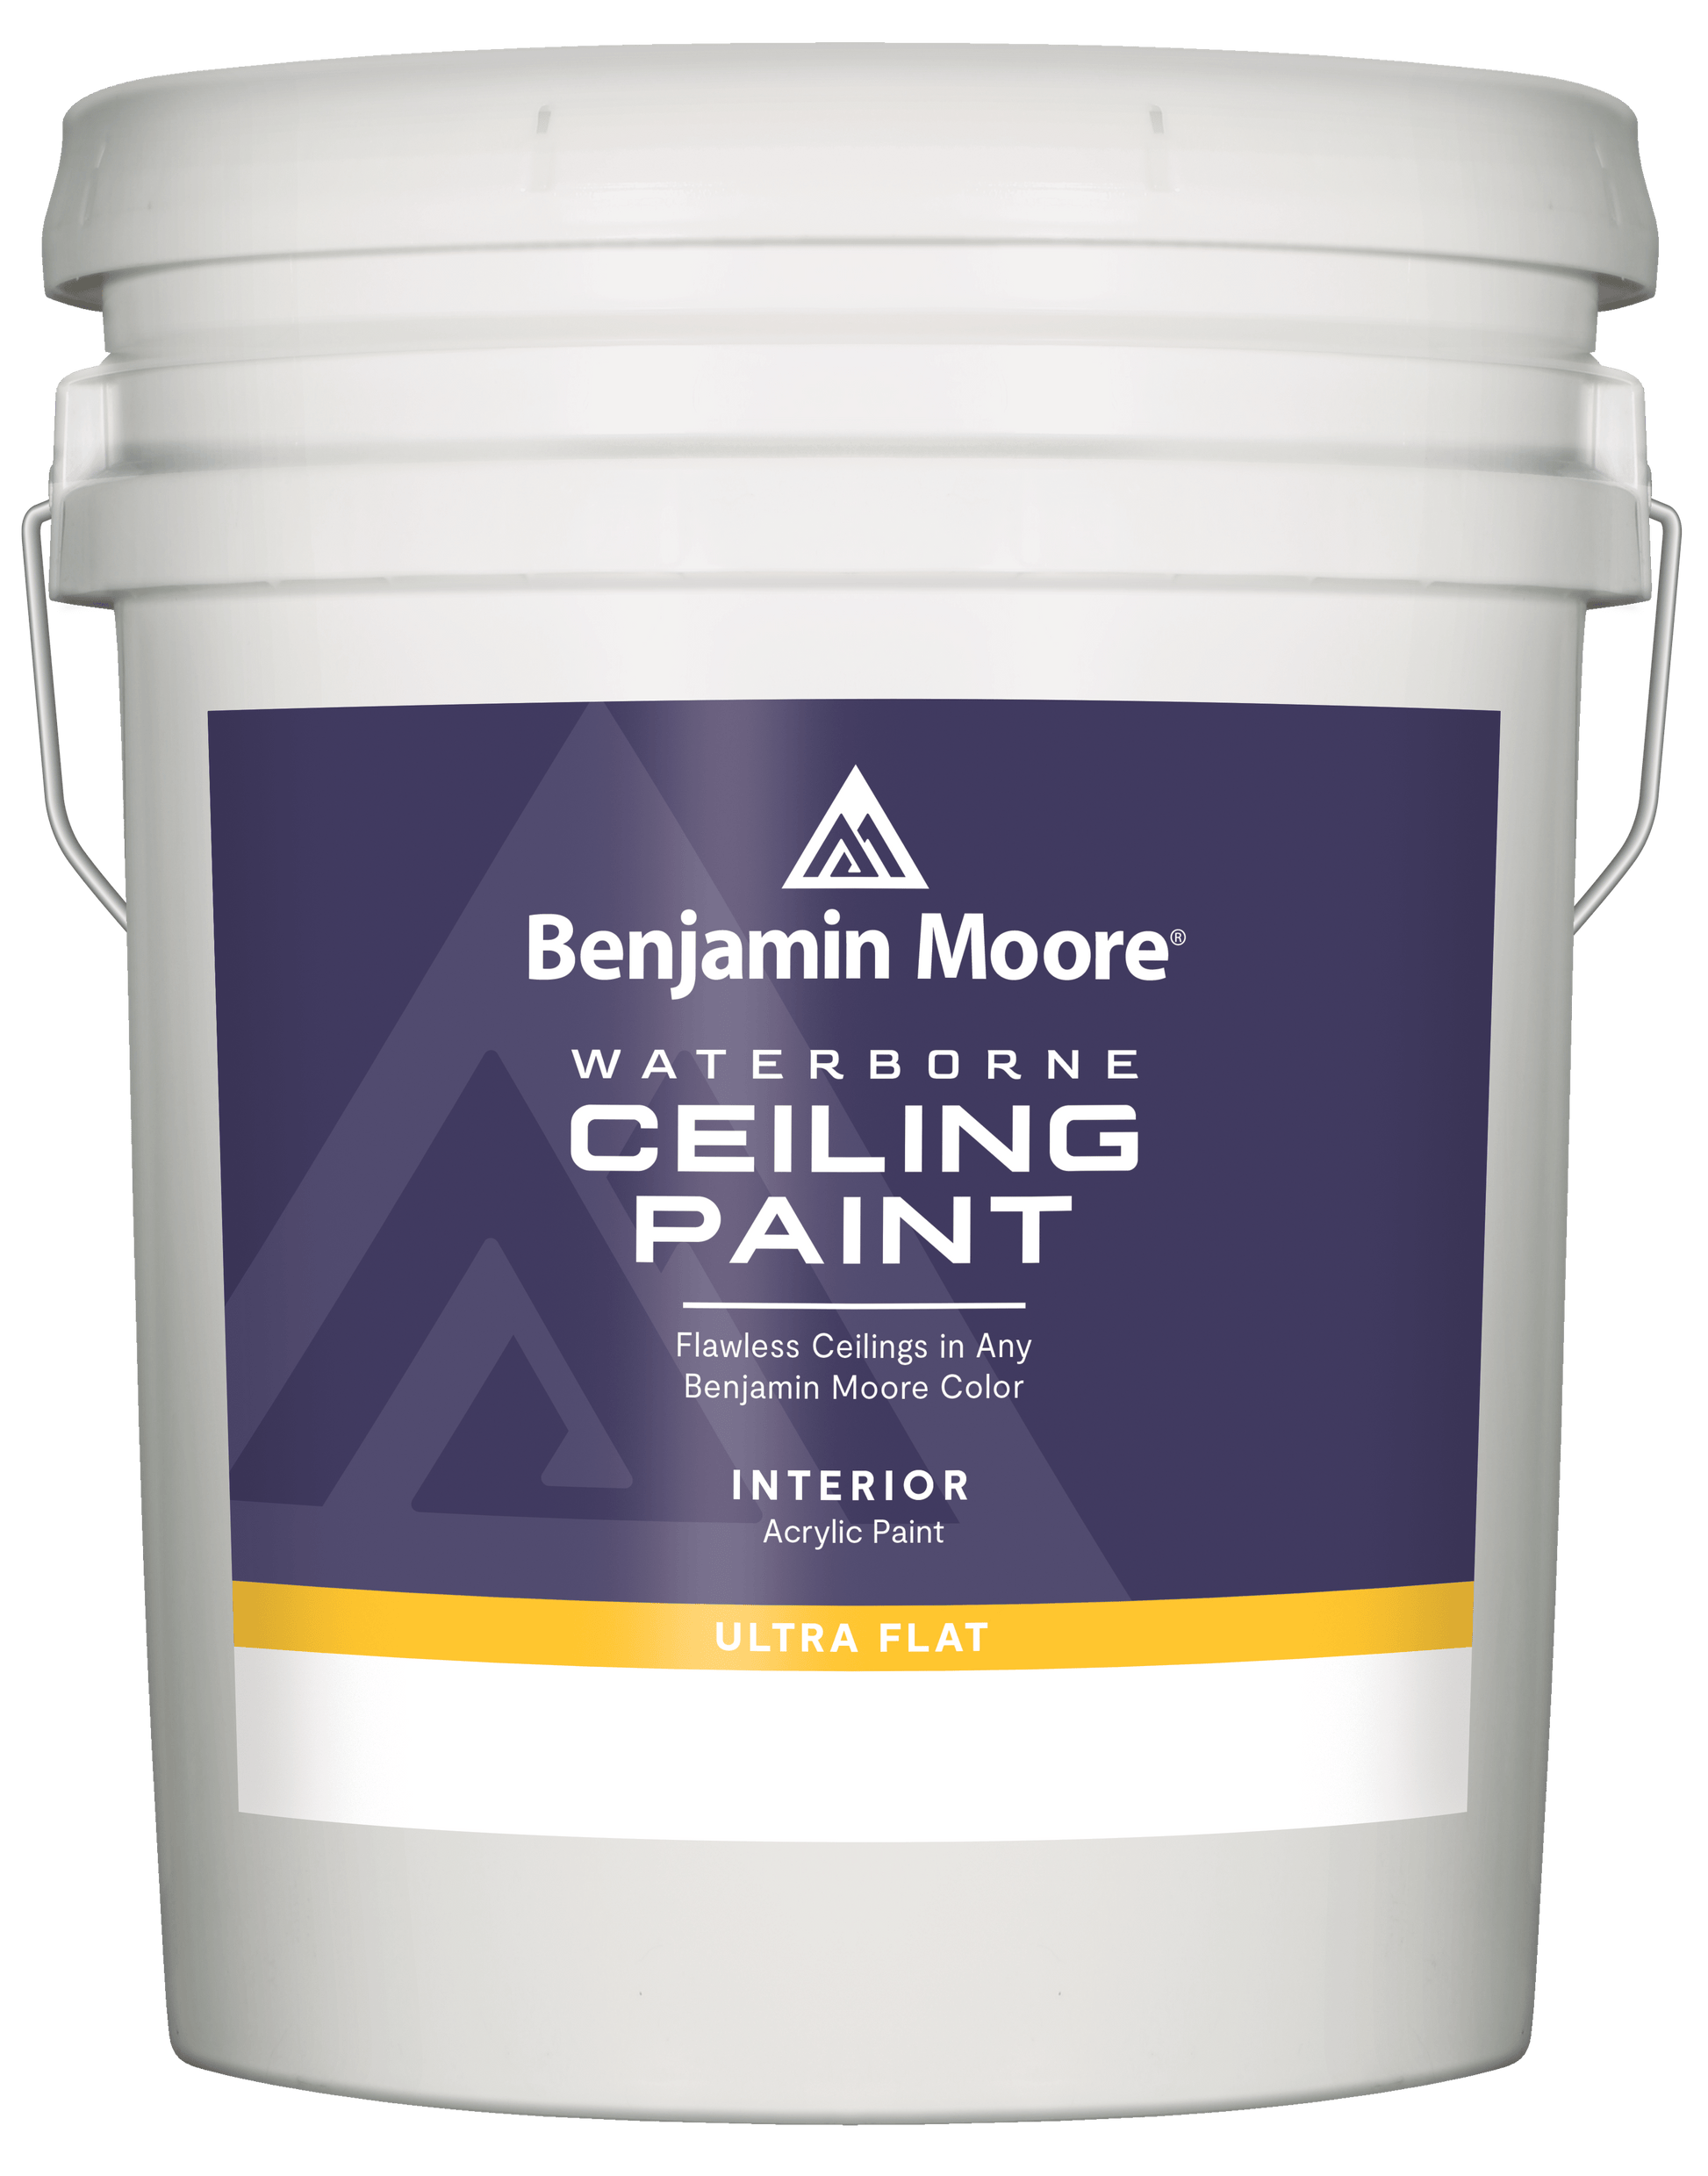 Benjamin Moore Waterborne Ceiling Paint - Rossi Paint Stores - Ultra Flat - 5 Gallon